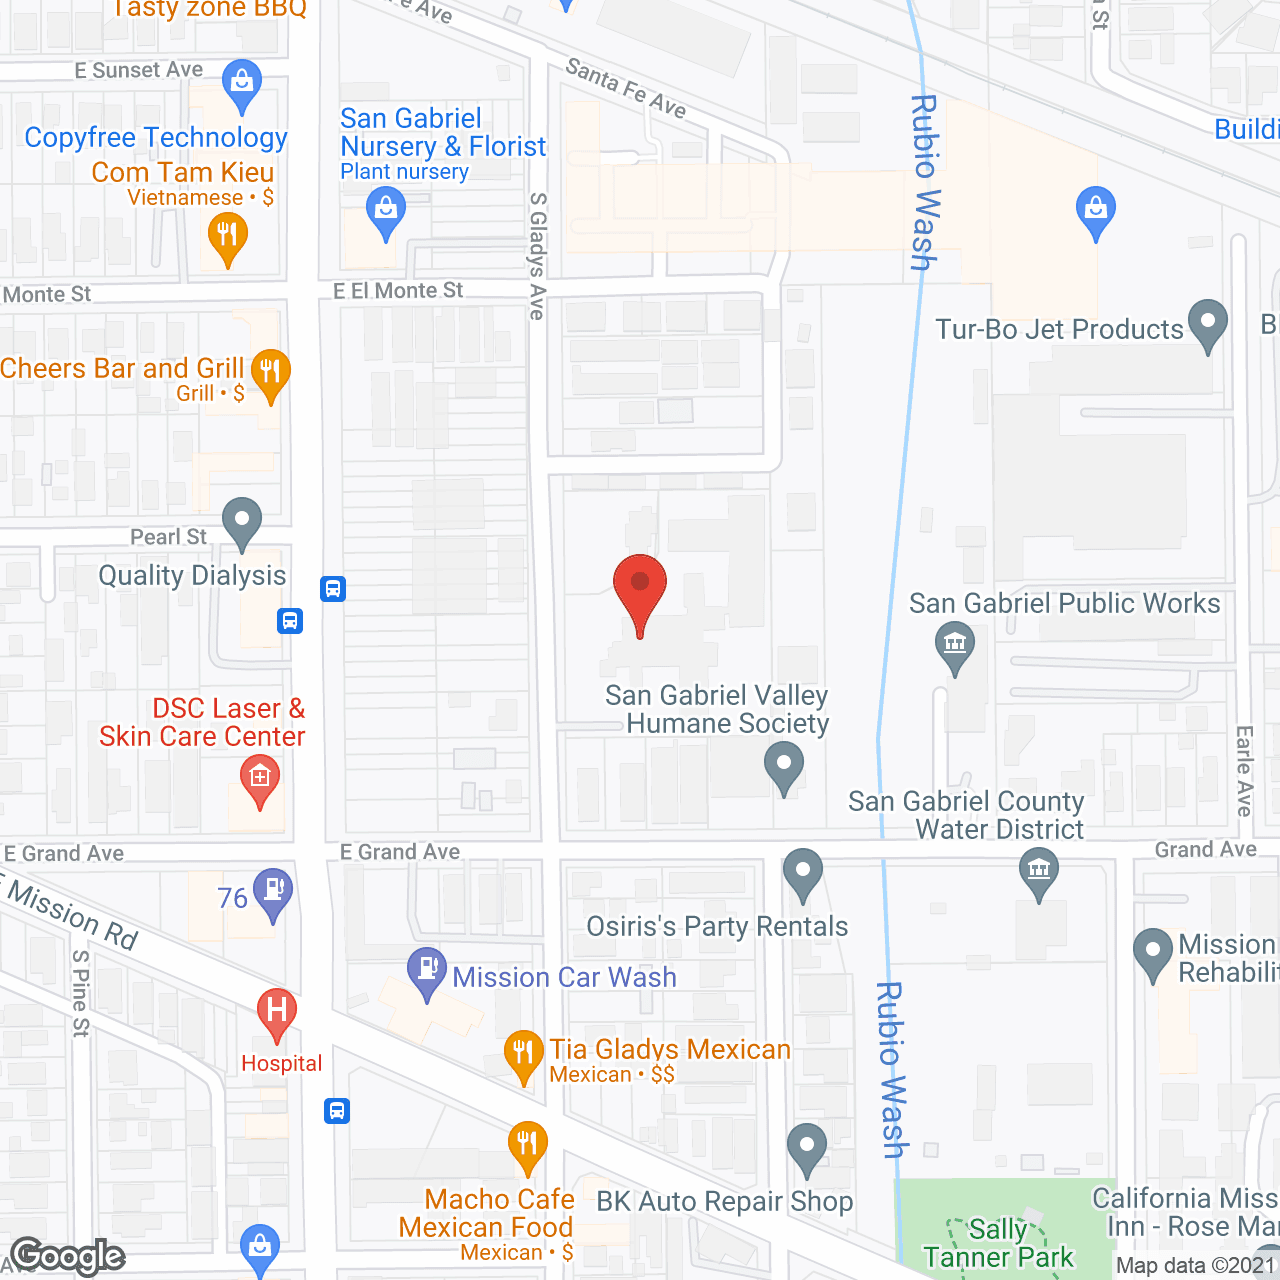 Mission Lodge Sanitarium in google map